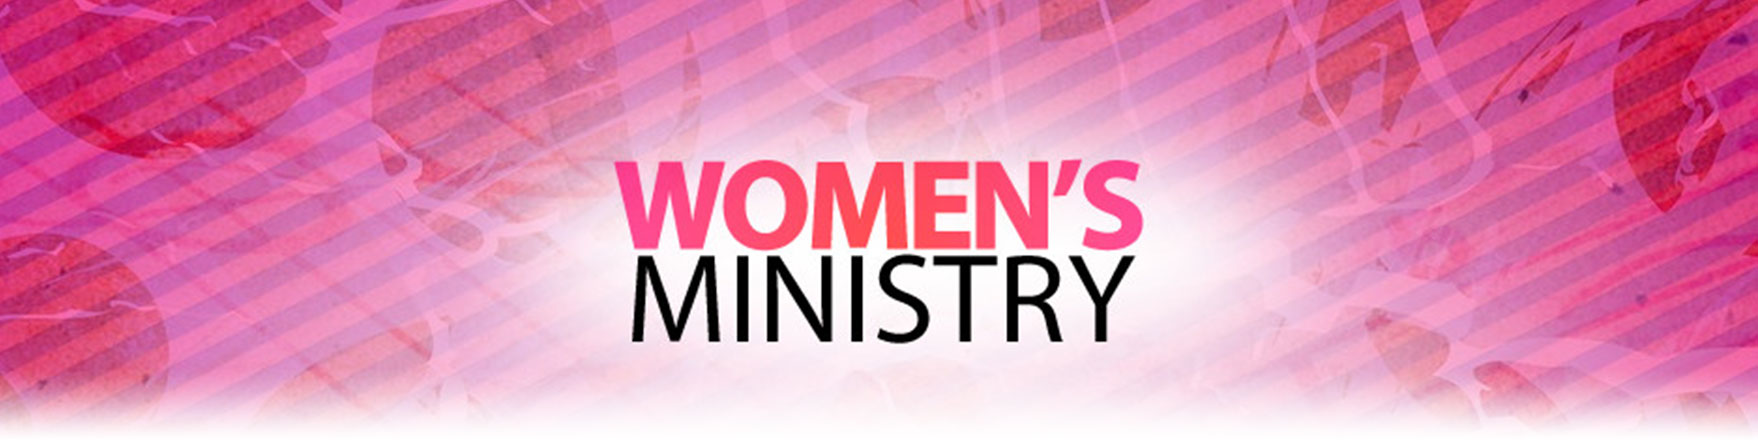 Womens-Ministry-1.jpg